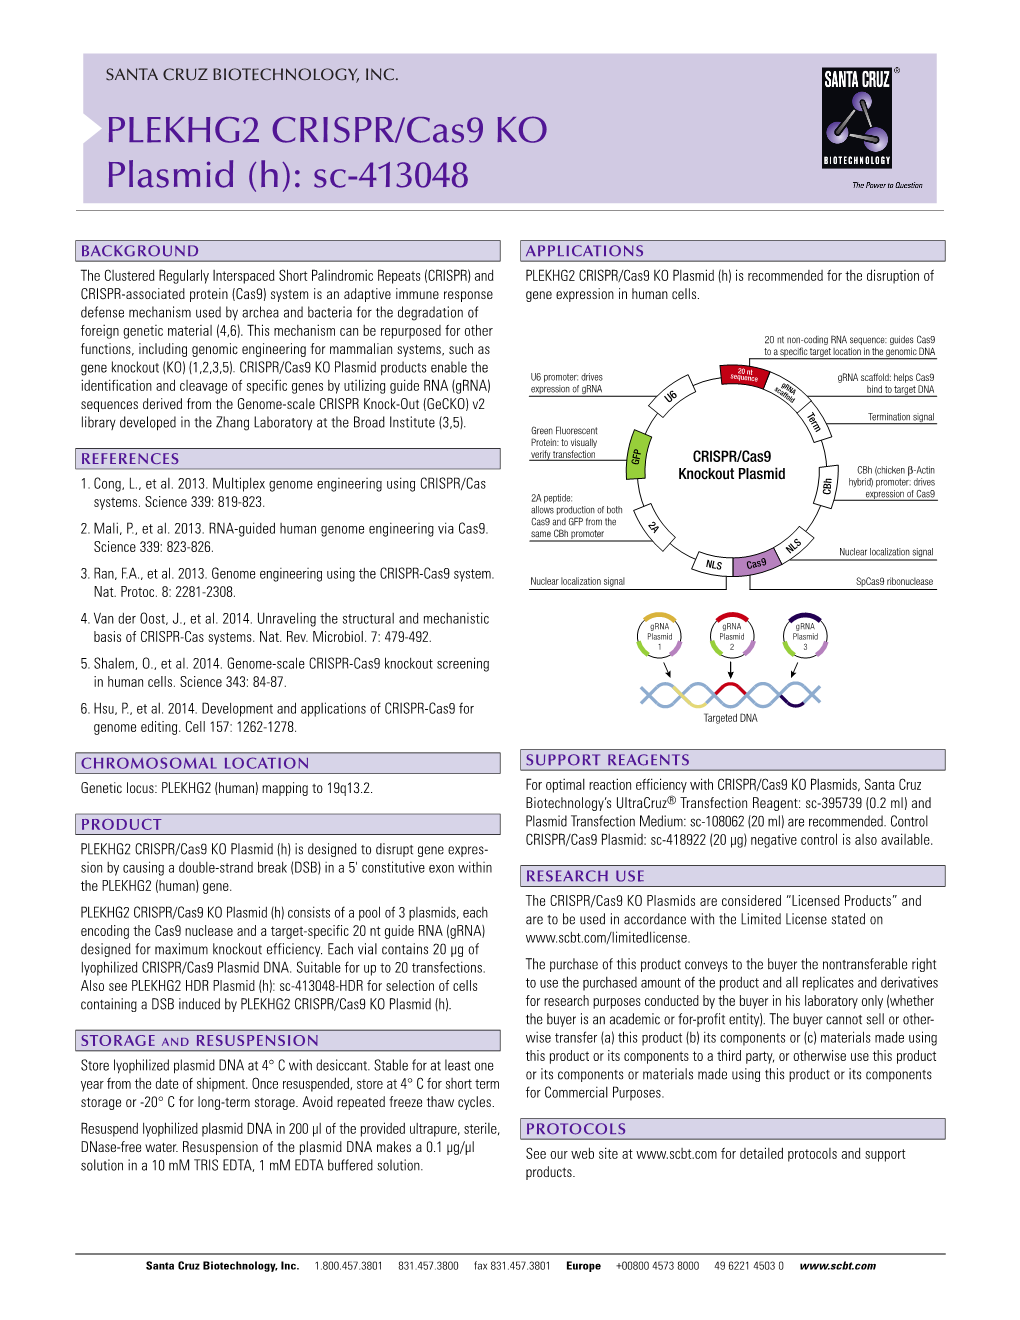 PLEKHG2 CRISPR/Cas9 KO Plasmid (H): Sc-413048